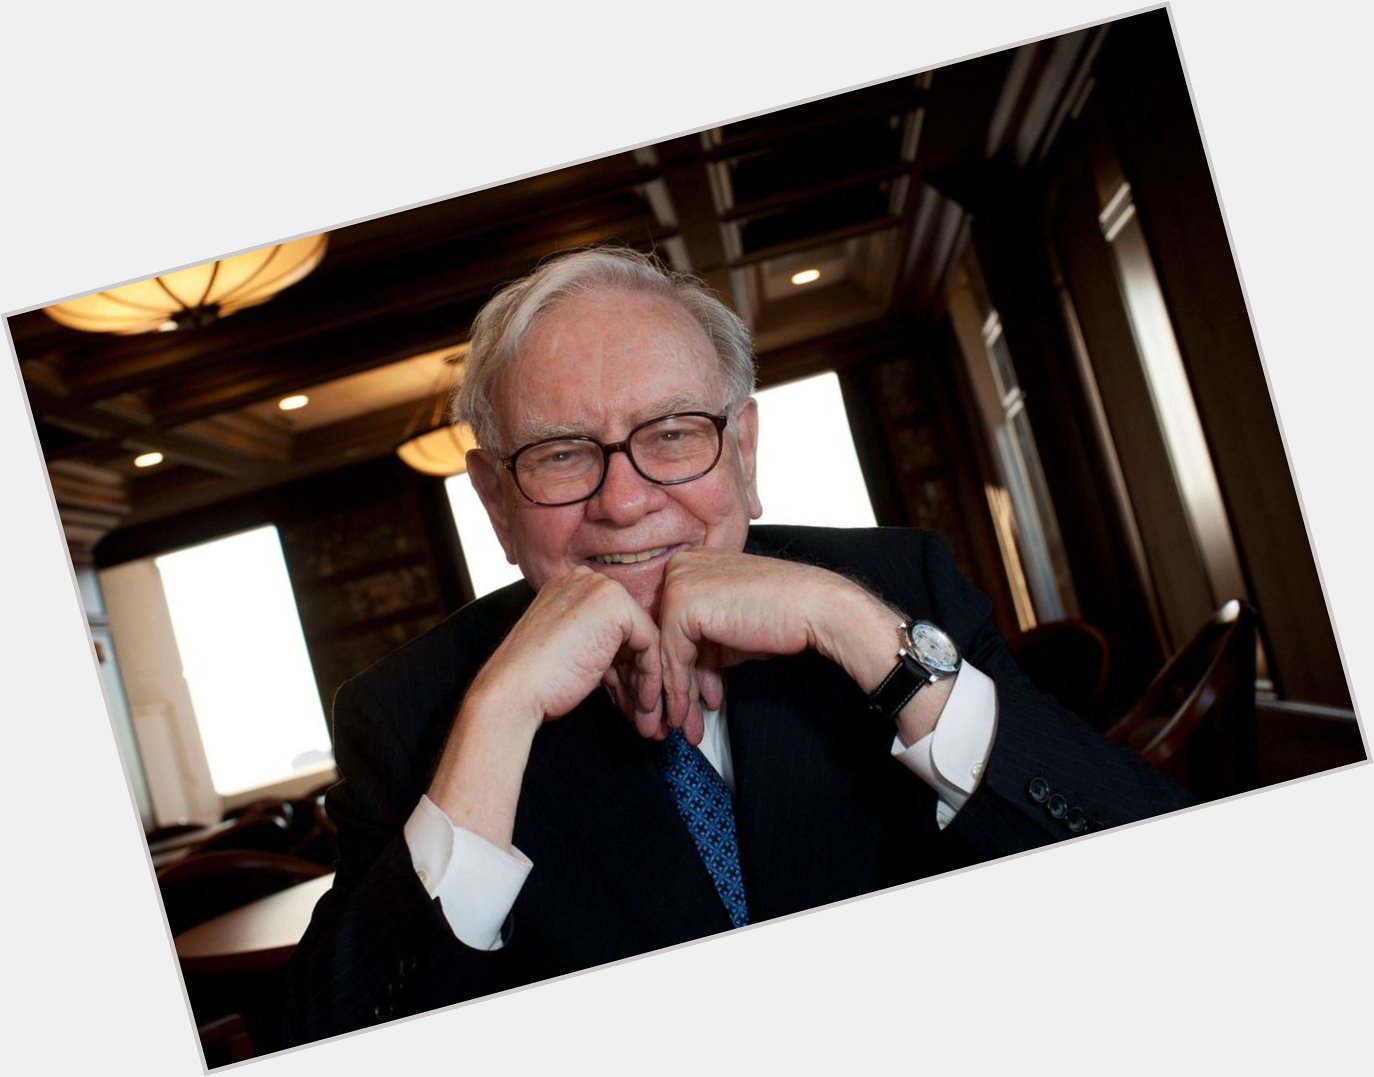 Sort of ... this ... is ... 

... who ... Warren Buffett ... is ... Happy Birthday !!! 